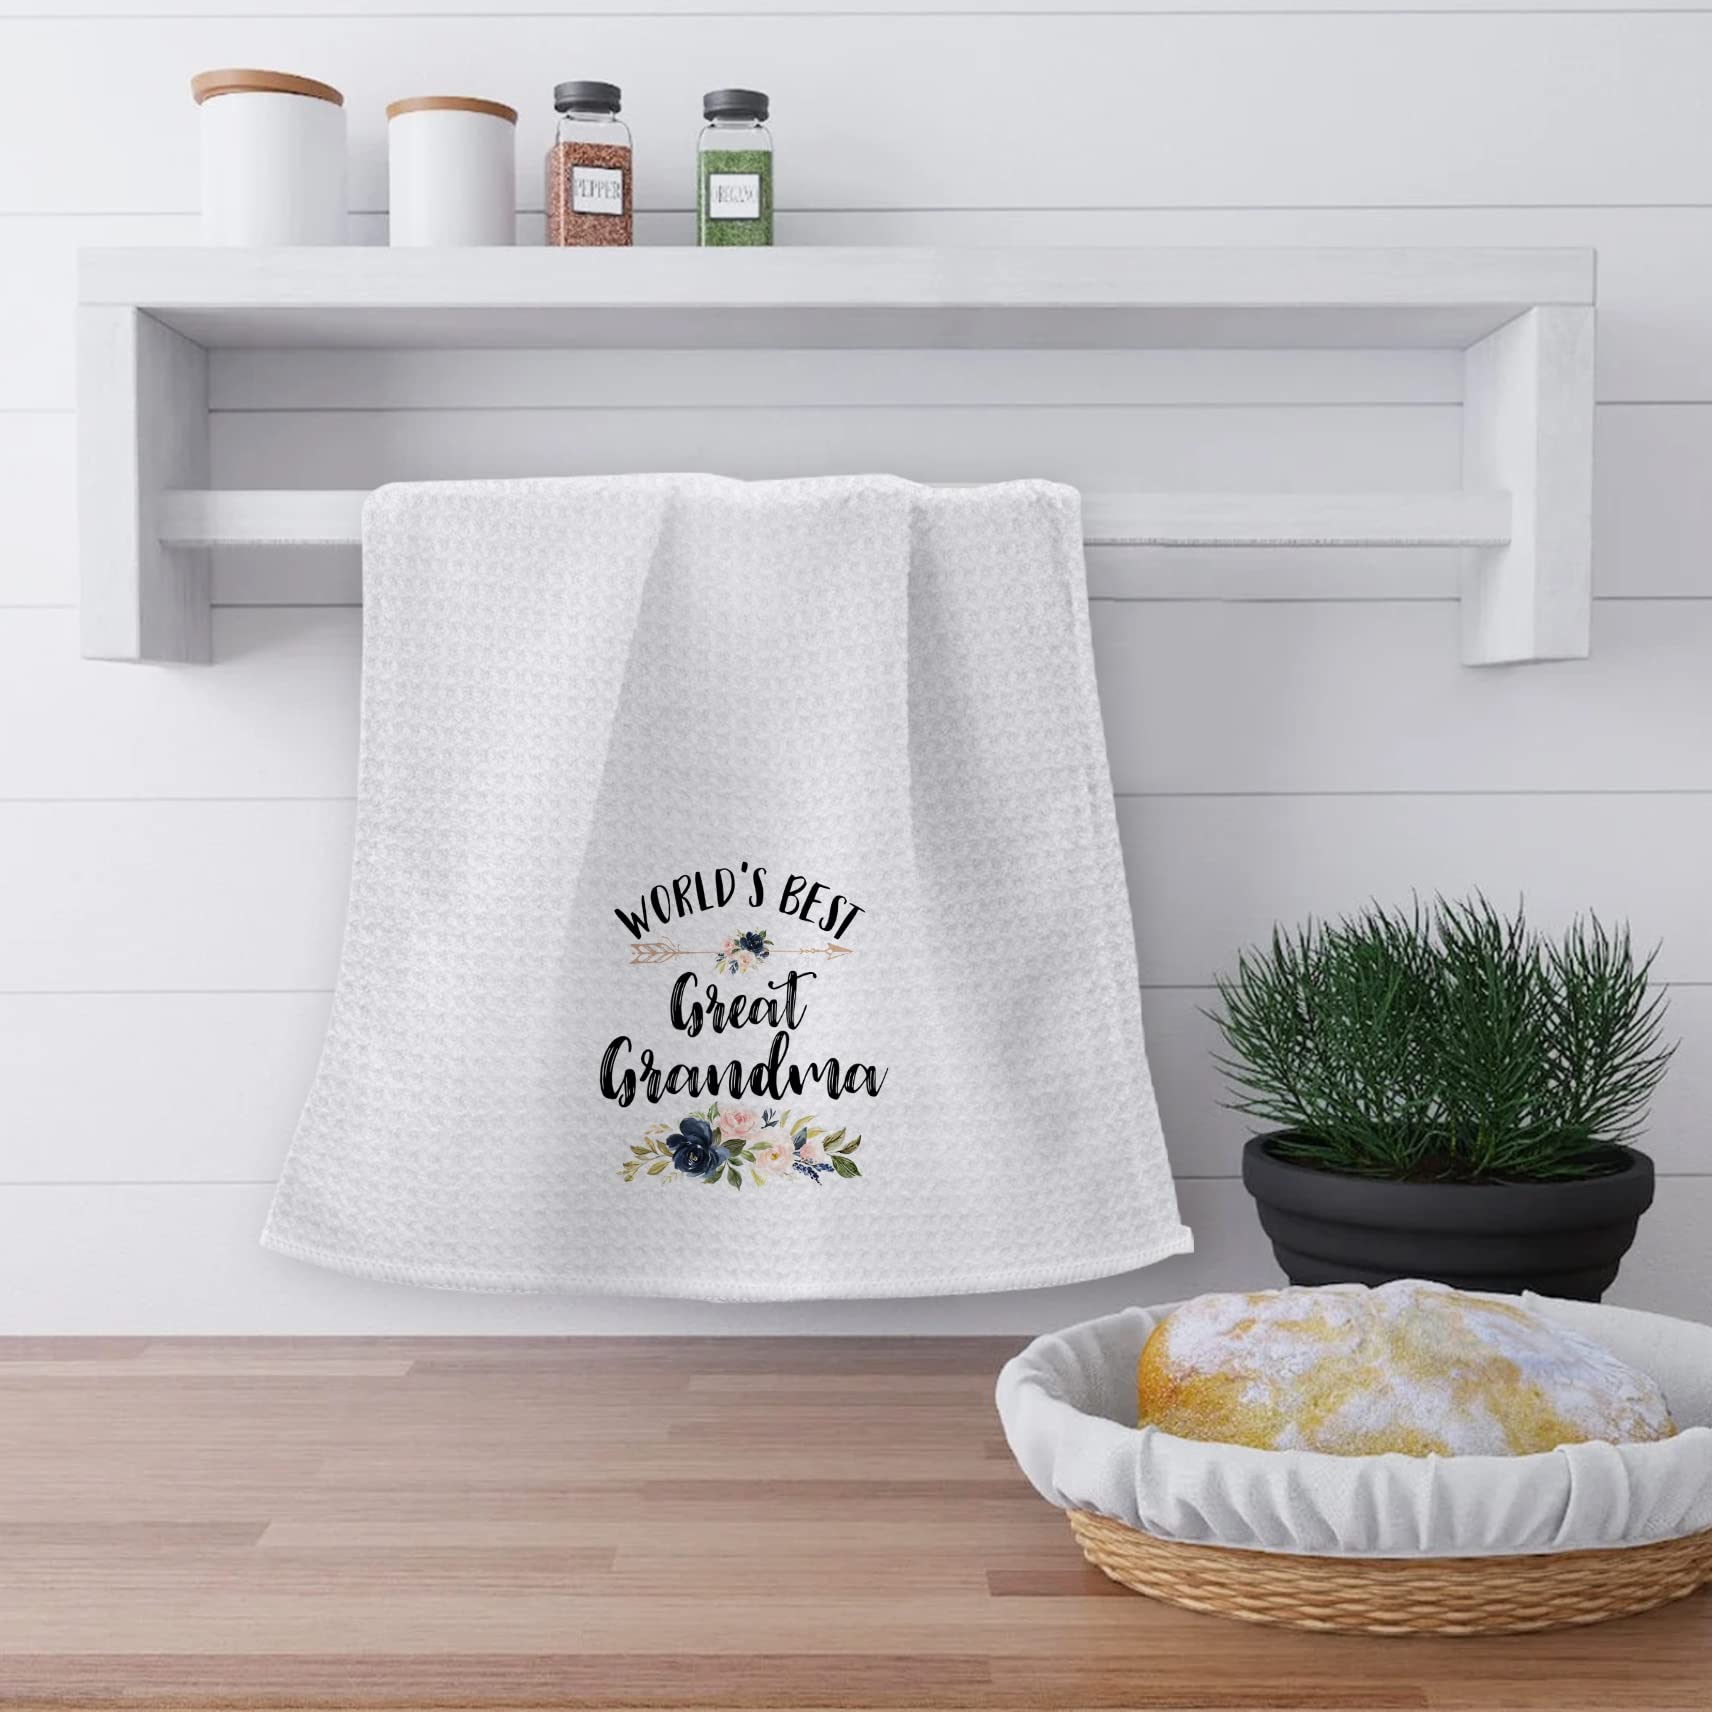 OHSUL World’s Best Great Grandma Floral Absorbent Kitchen Towels Dish Towels Dish Cloth,Grandma Mother's Day Hand Towels Tea Towel for Bathroom Kitchen Decor,Grandma Gifts